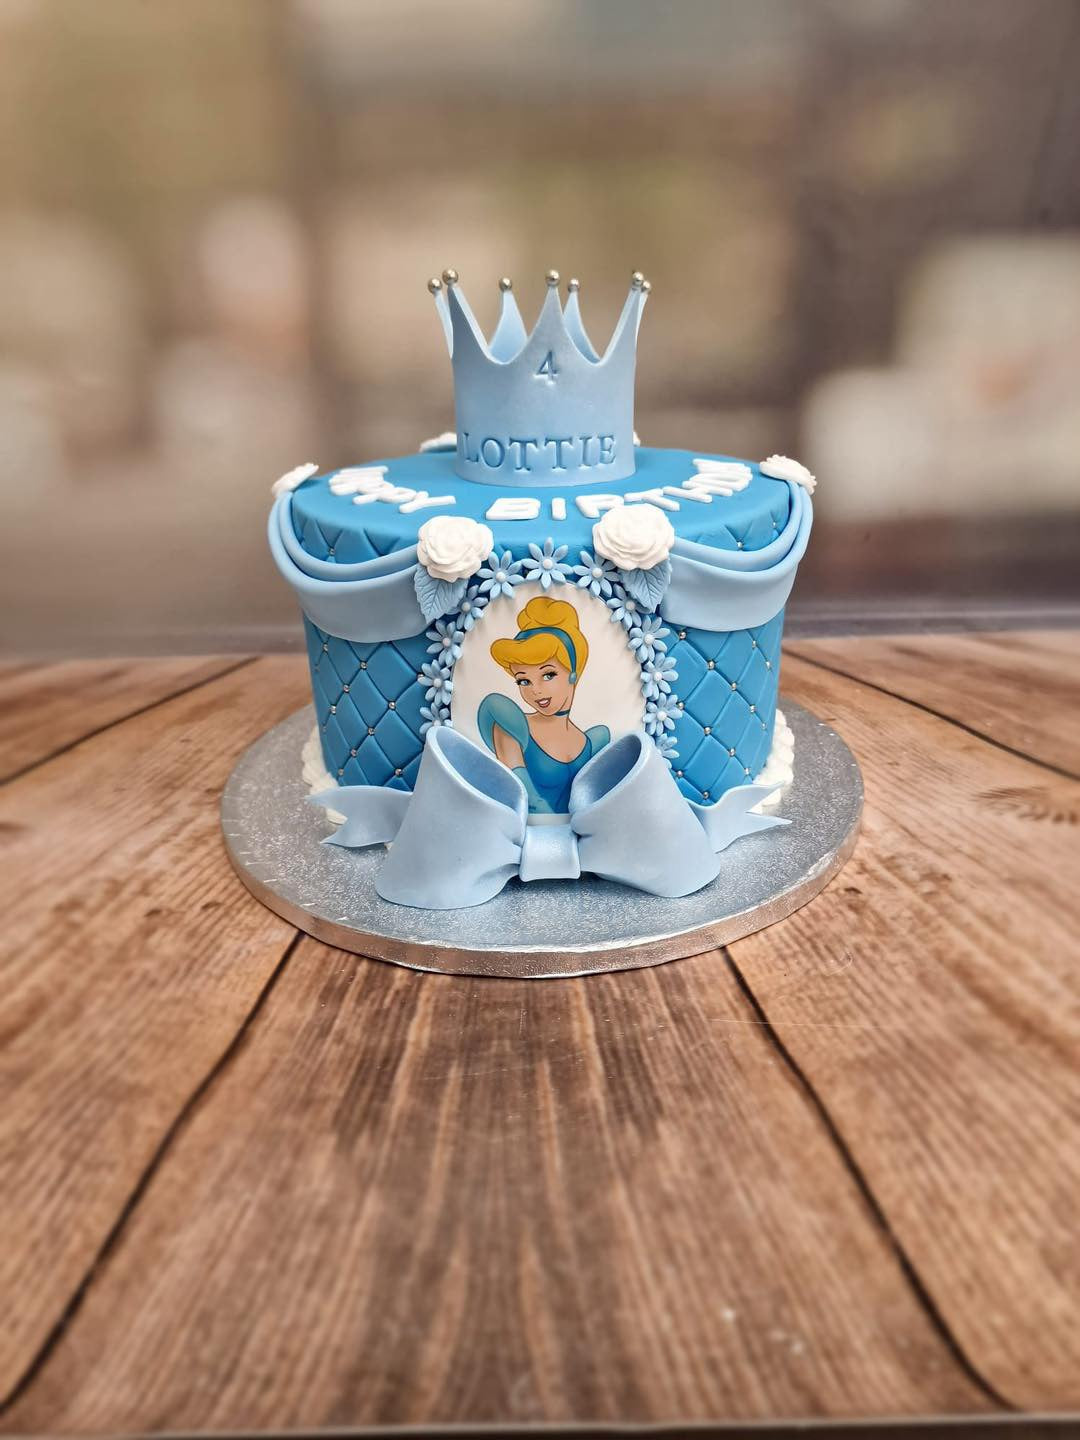 Cinderella theme cake - Decorated Cake by Cakes for mates - CakesDecor